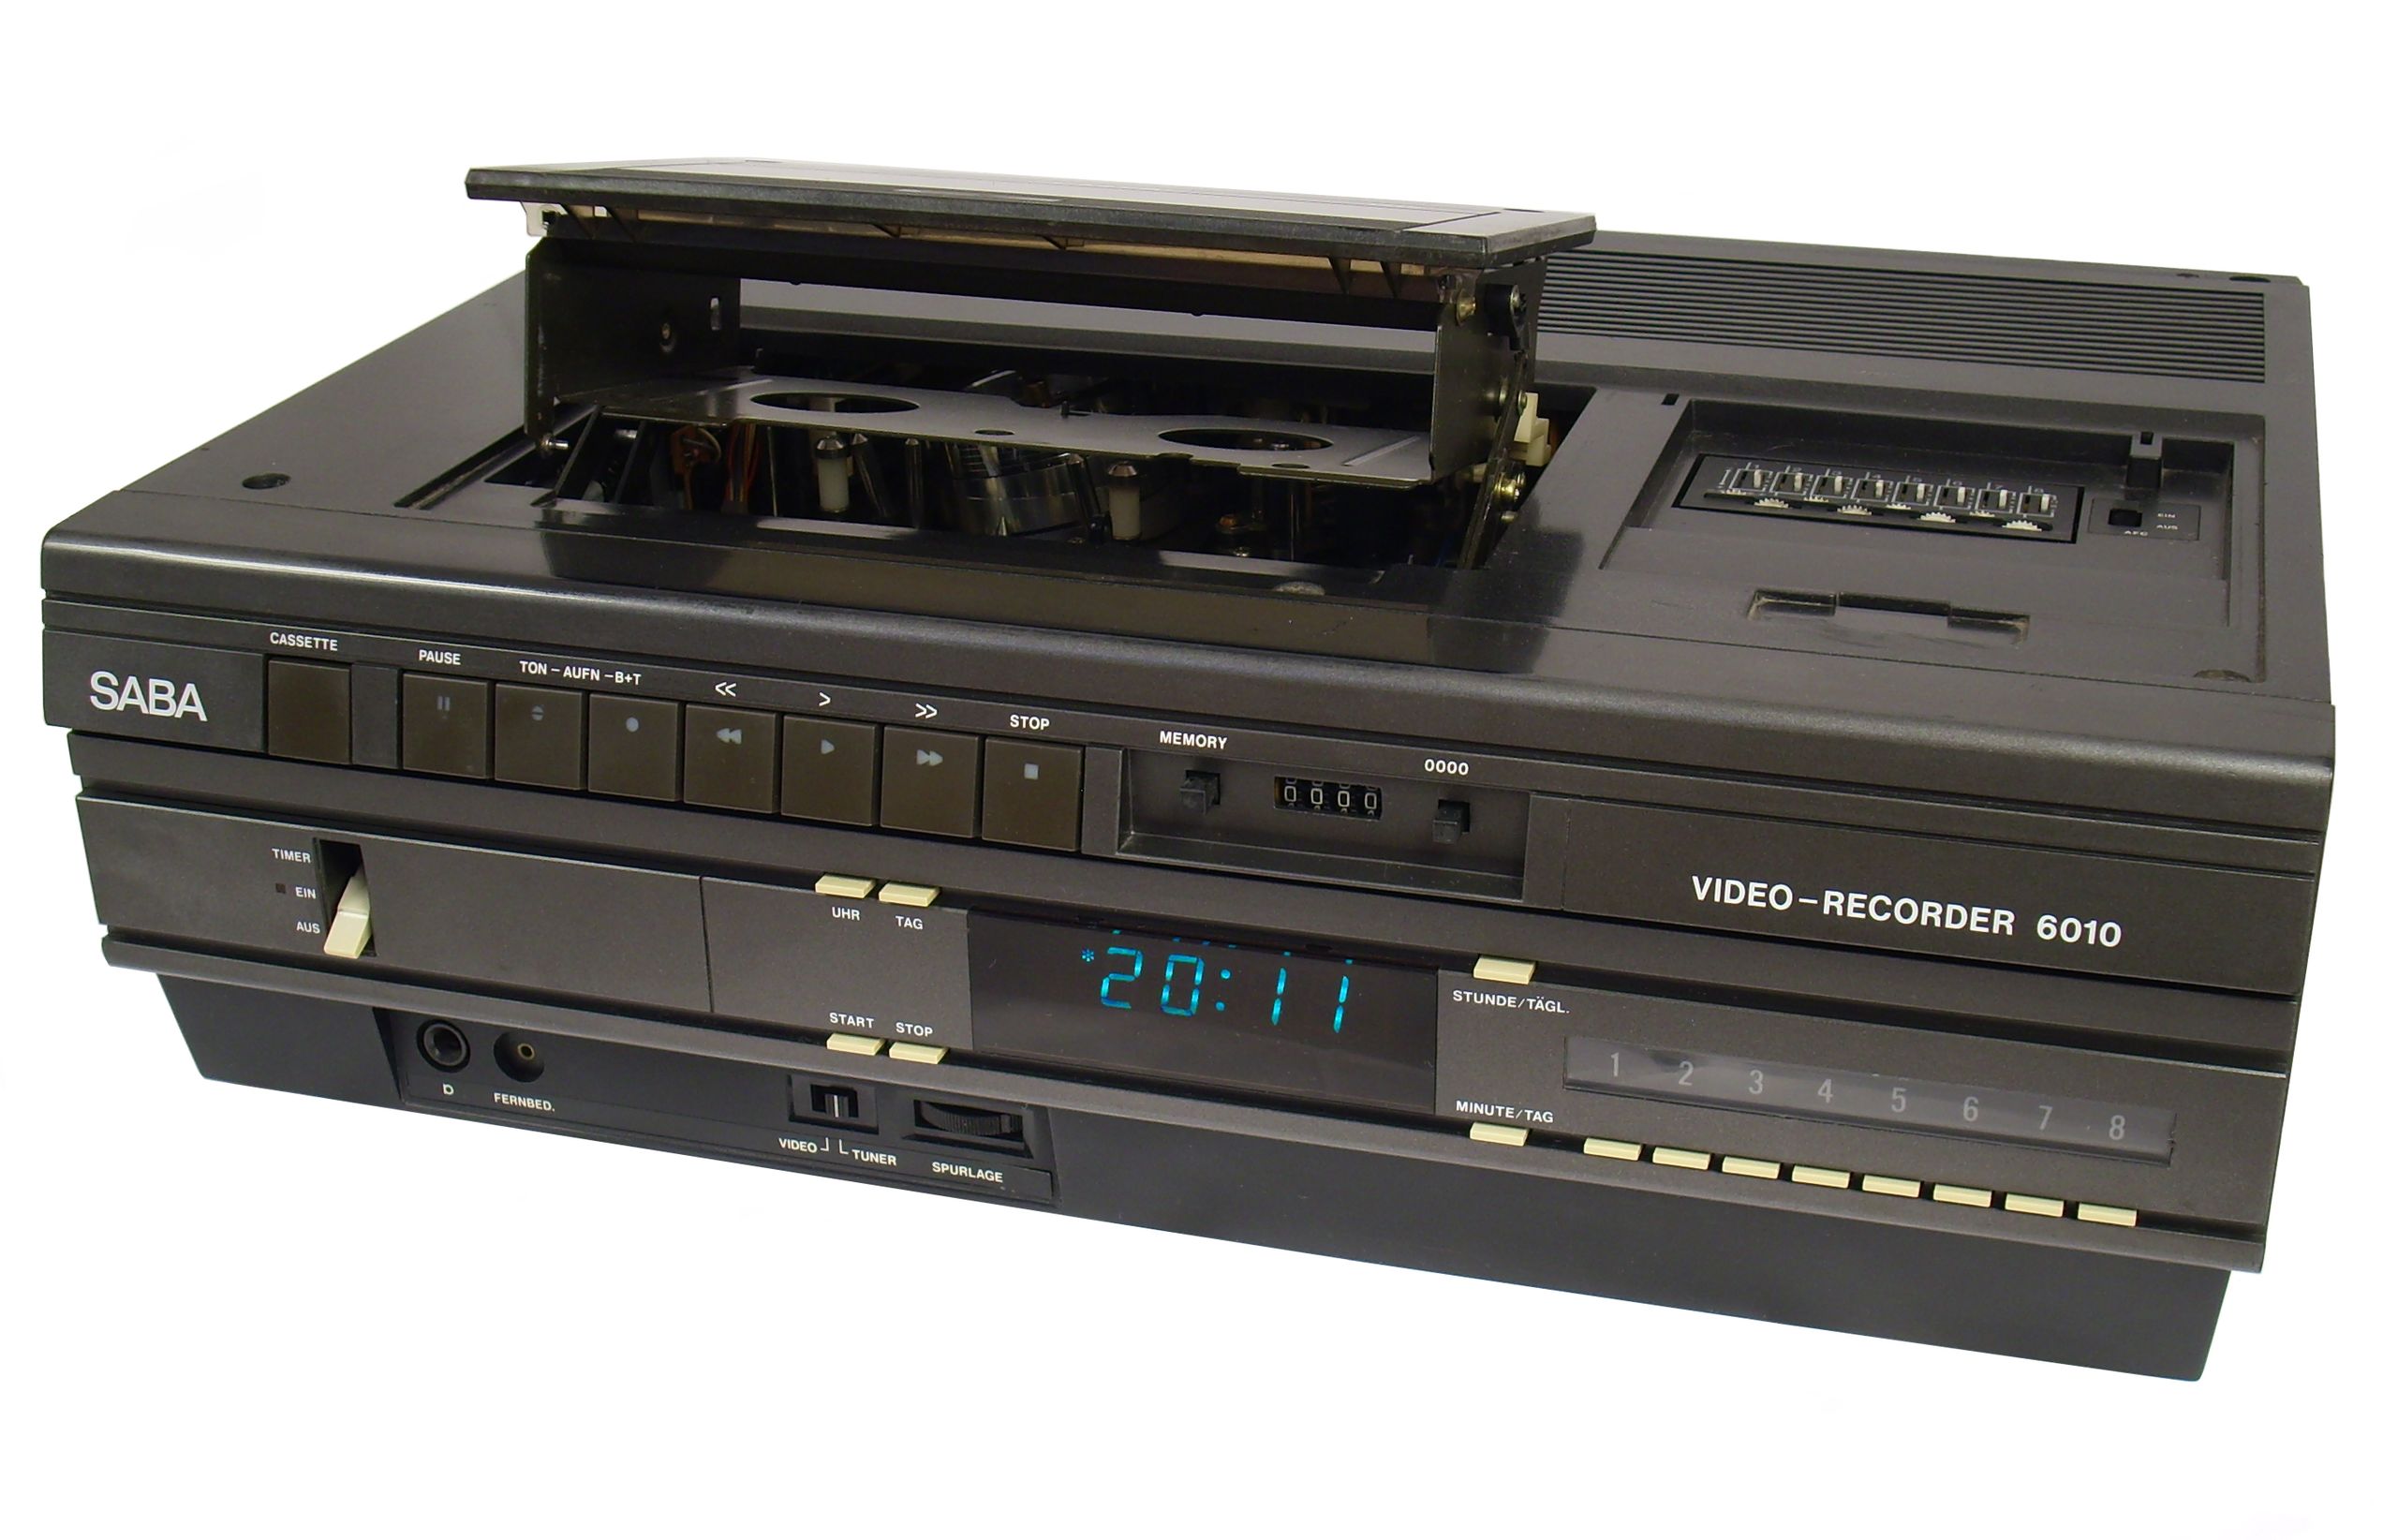 Video cassette player. JVC HR-7200. Видеомагнитофон Saba. VHS Panasonic видеомагнитофон кассетный. Видеомагнитофон VHS Sony медицинский.